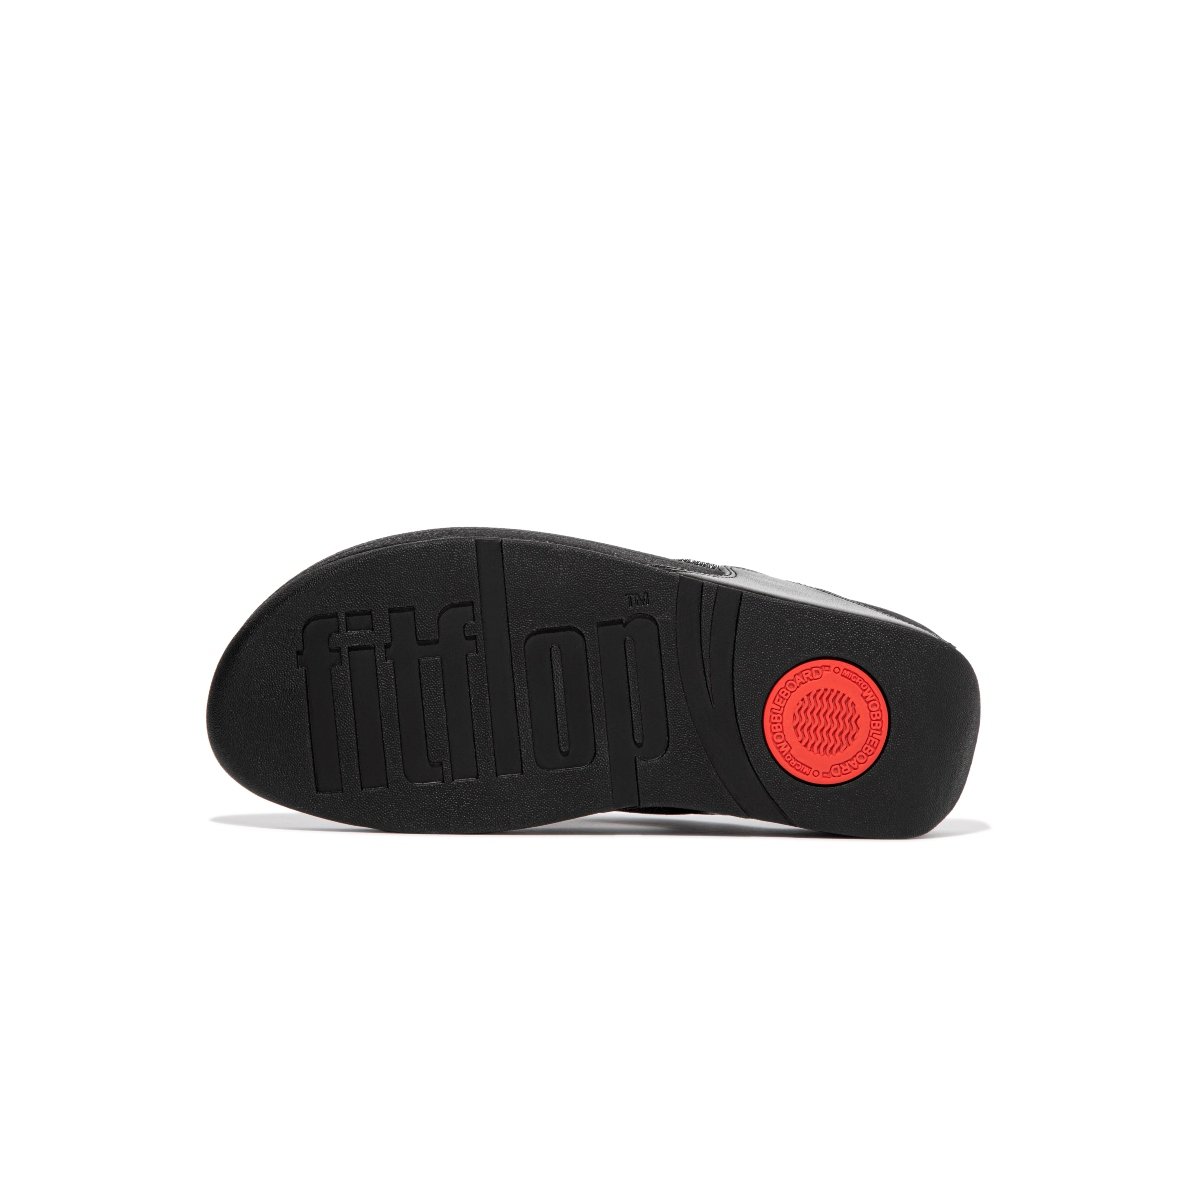 FitFlop LULU Glitz Toe-Post Sandals All Black outsole